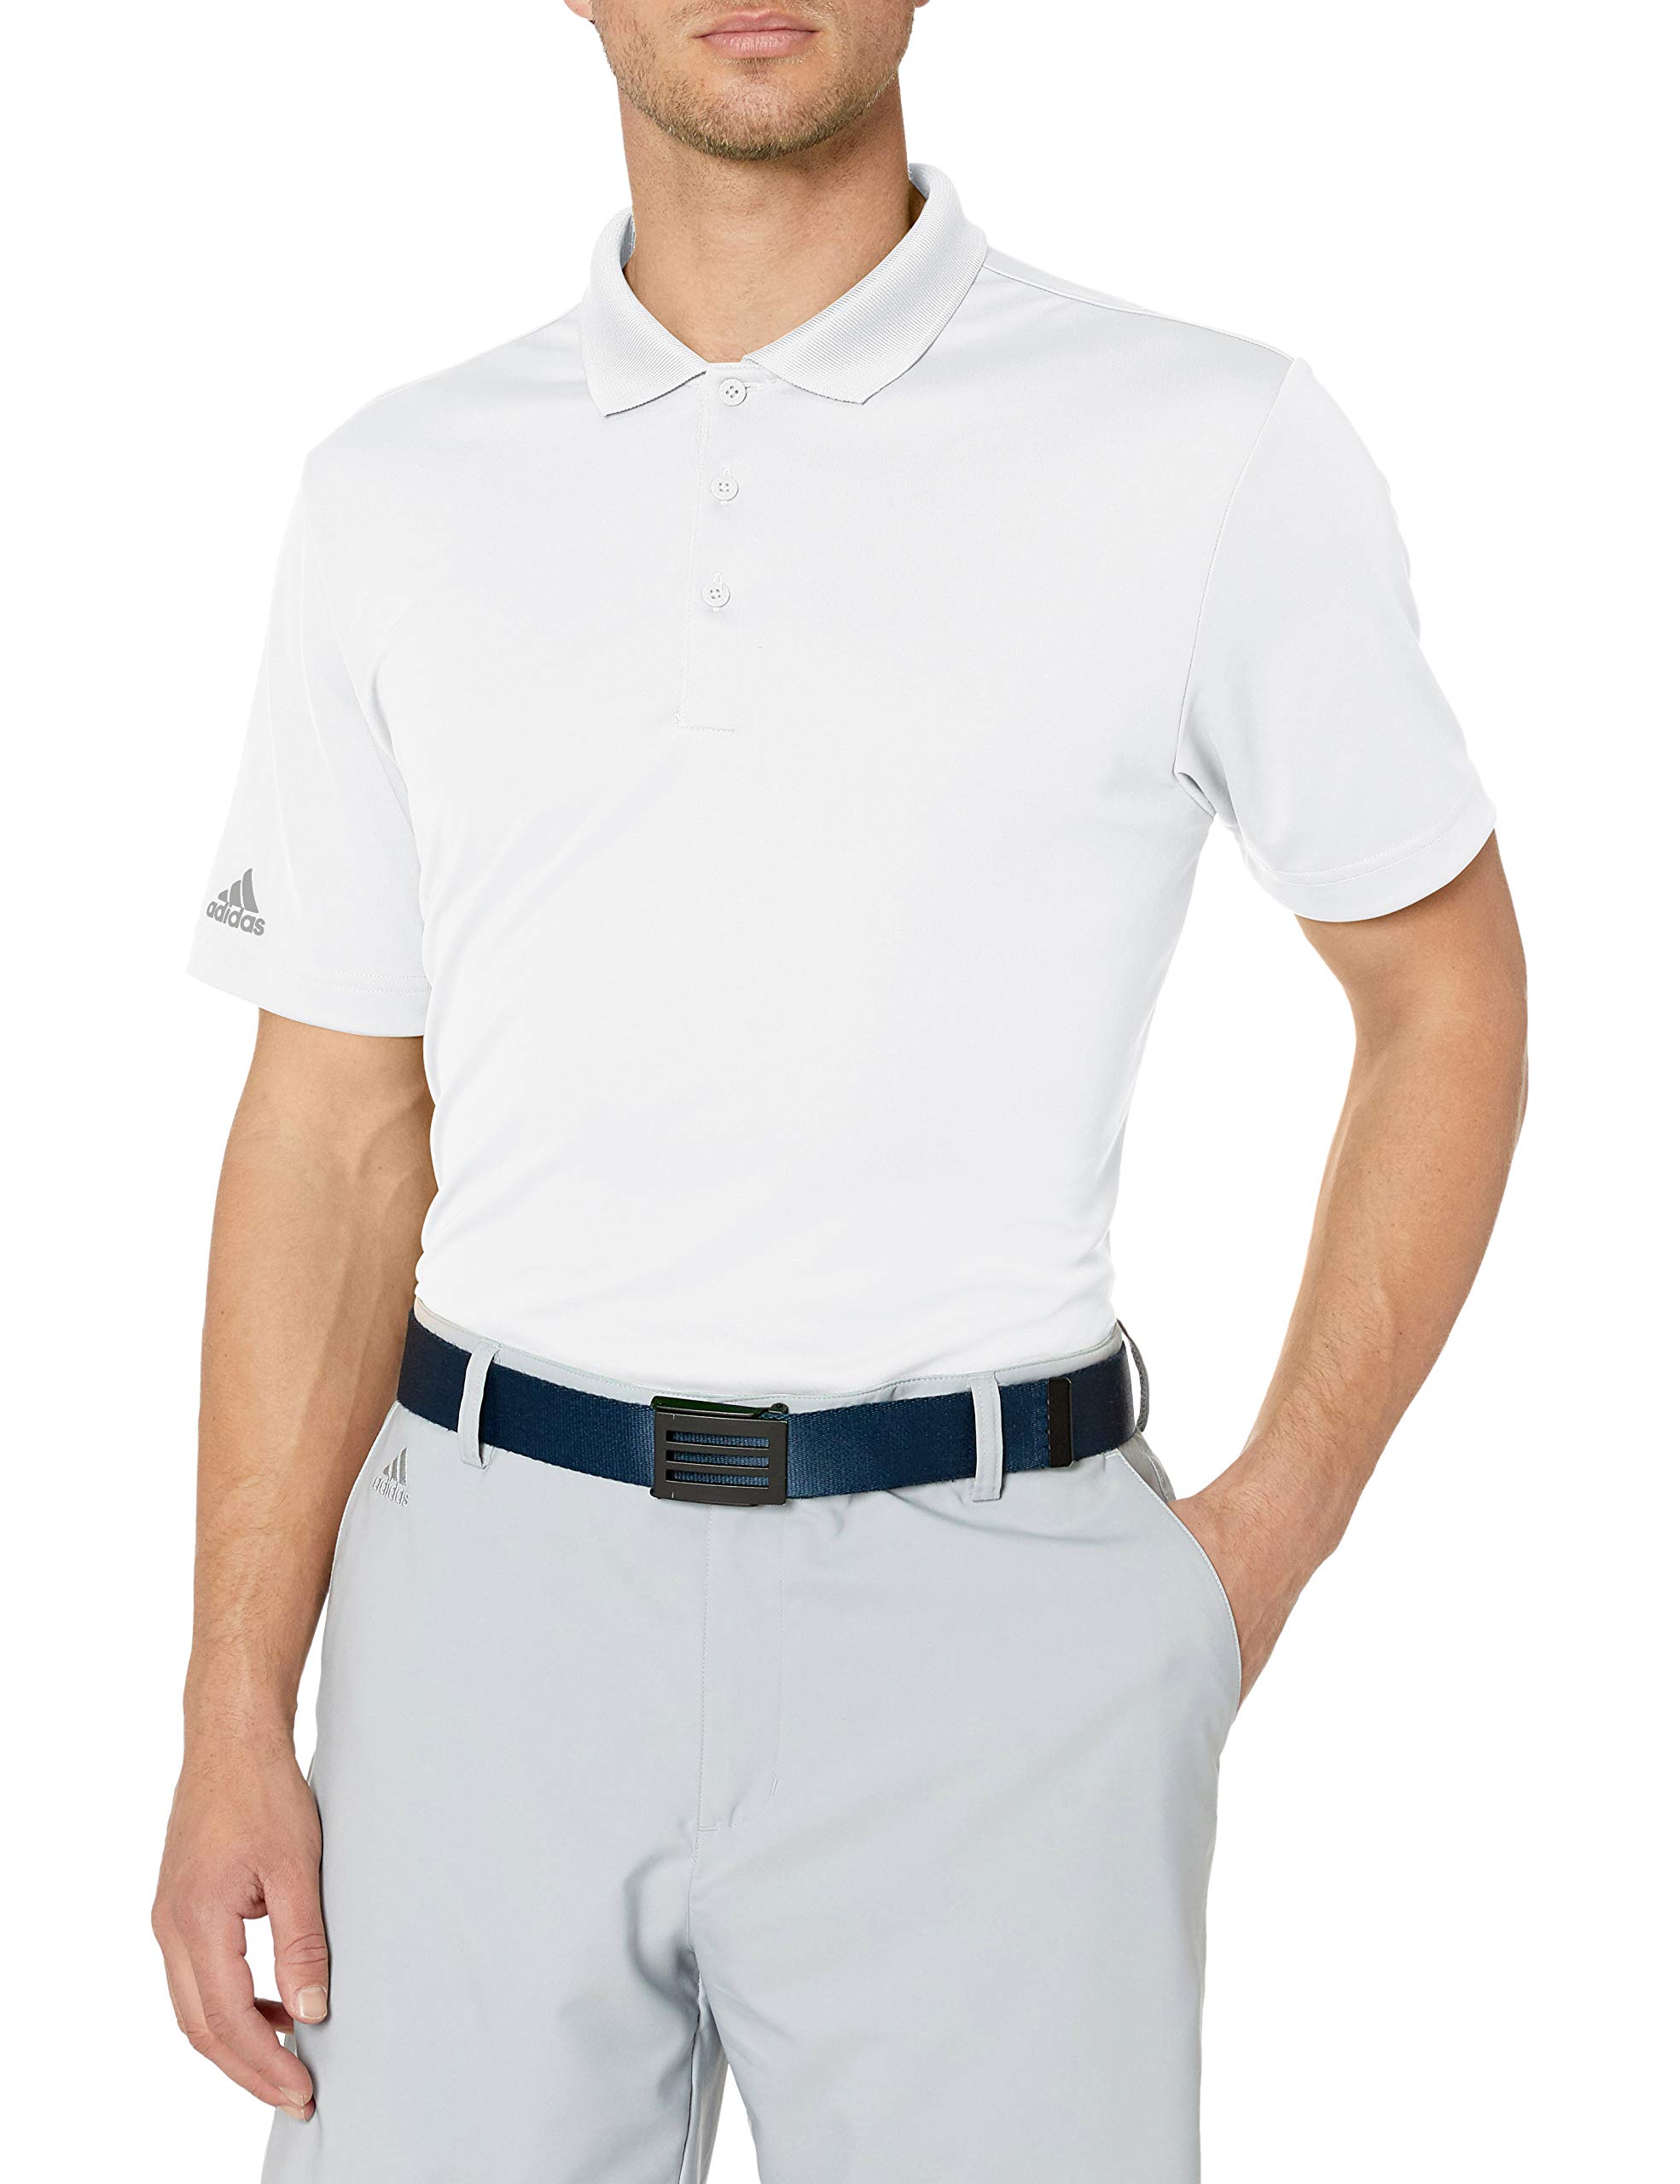 adidas Golf Men's Performance Polo, White, X-Large